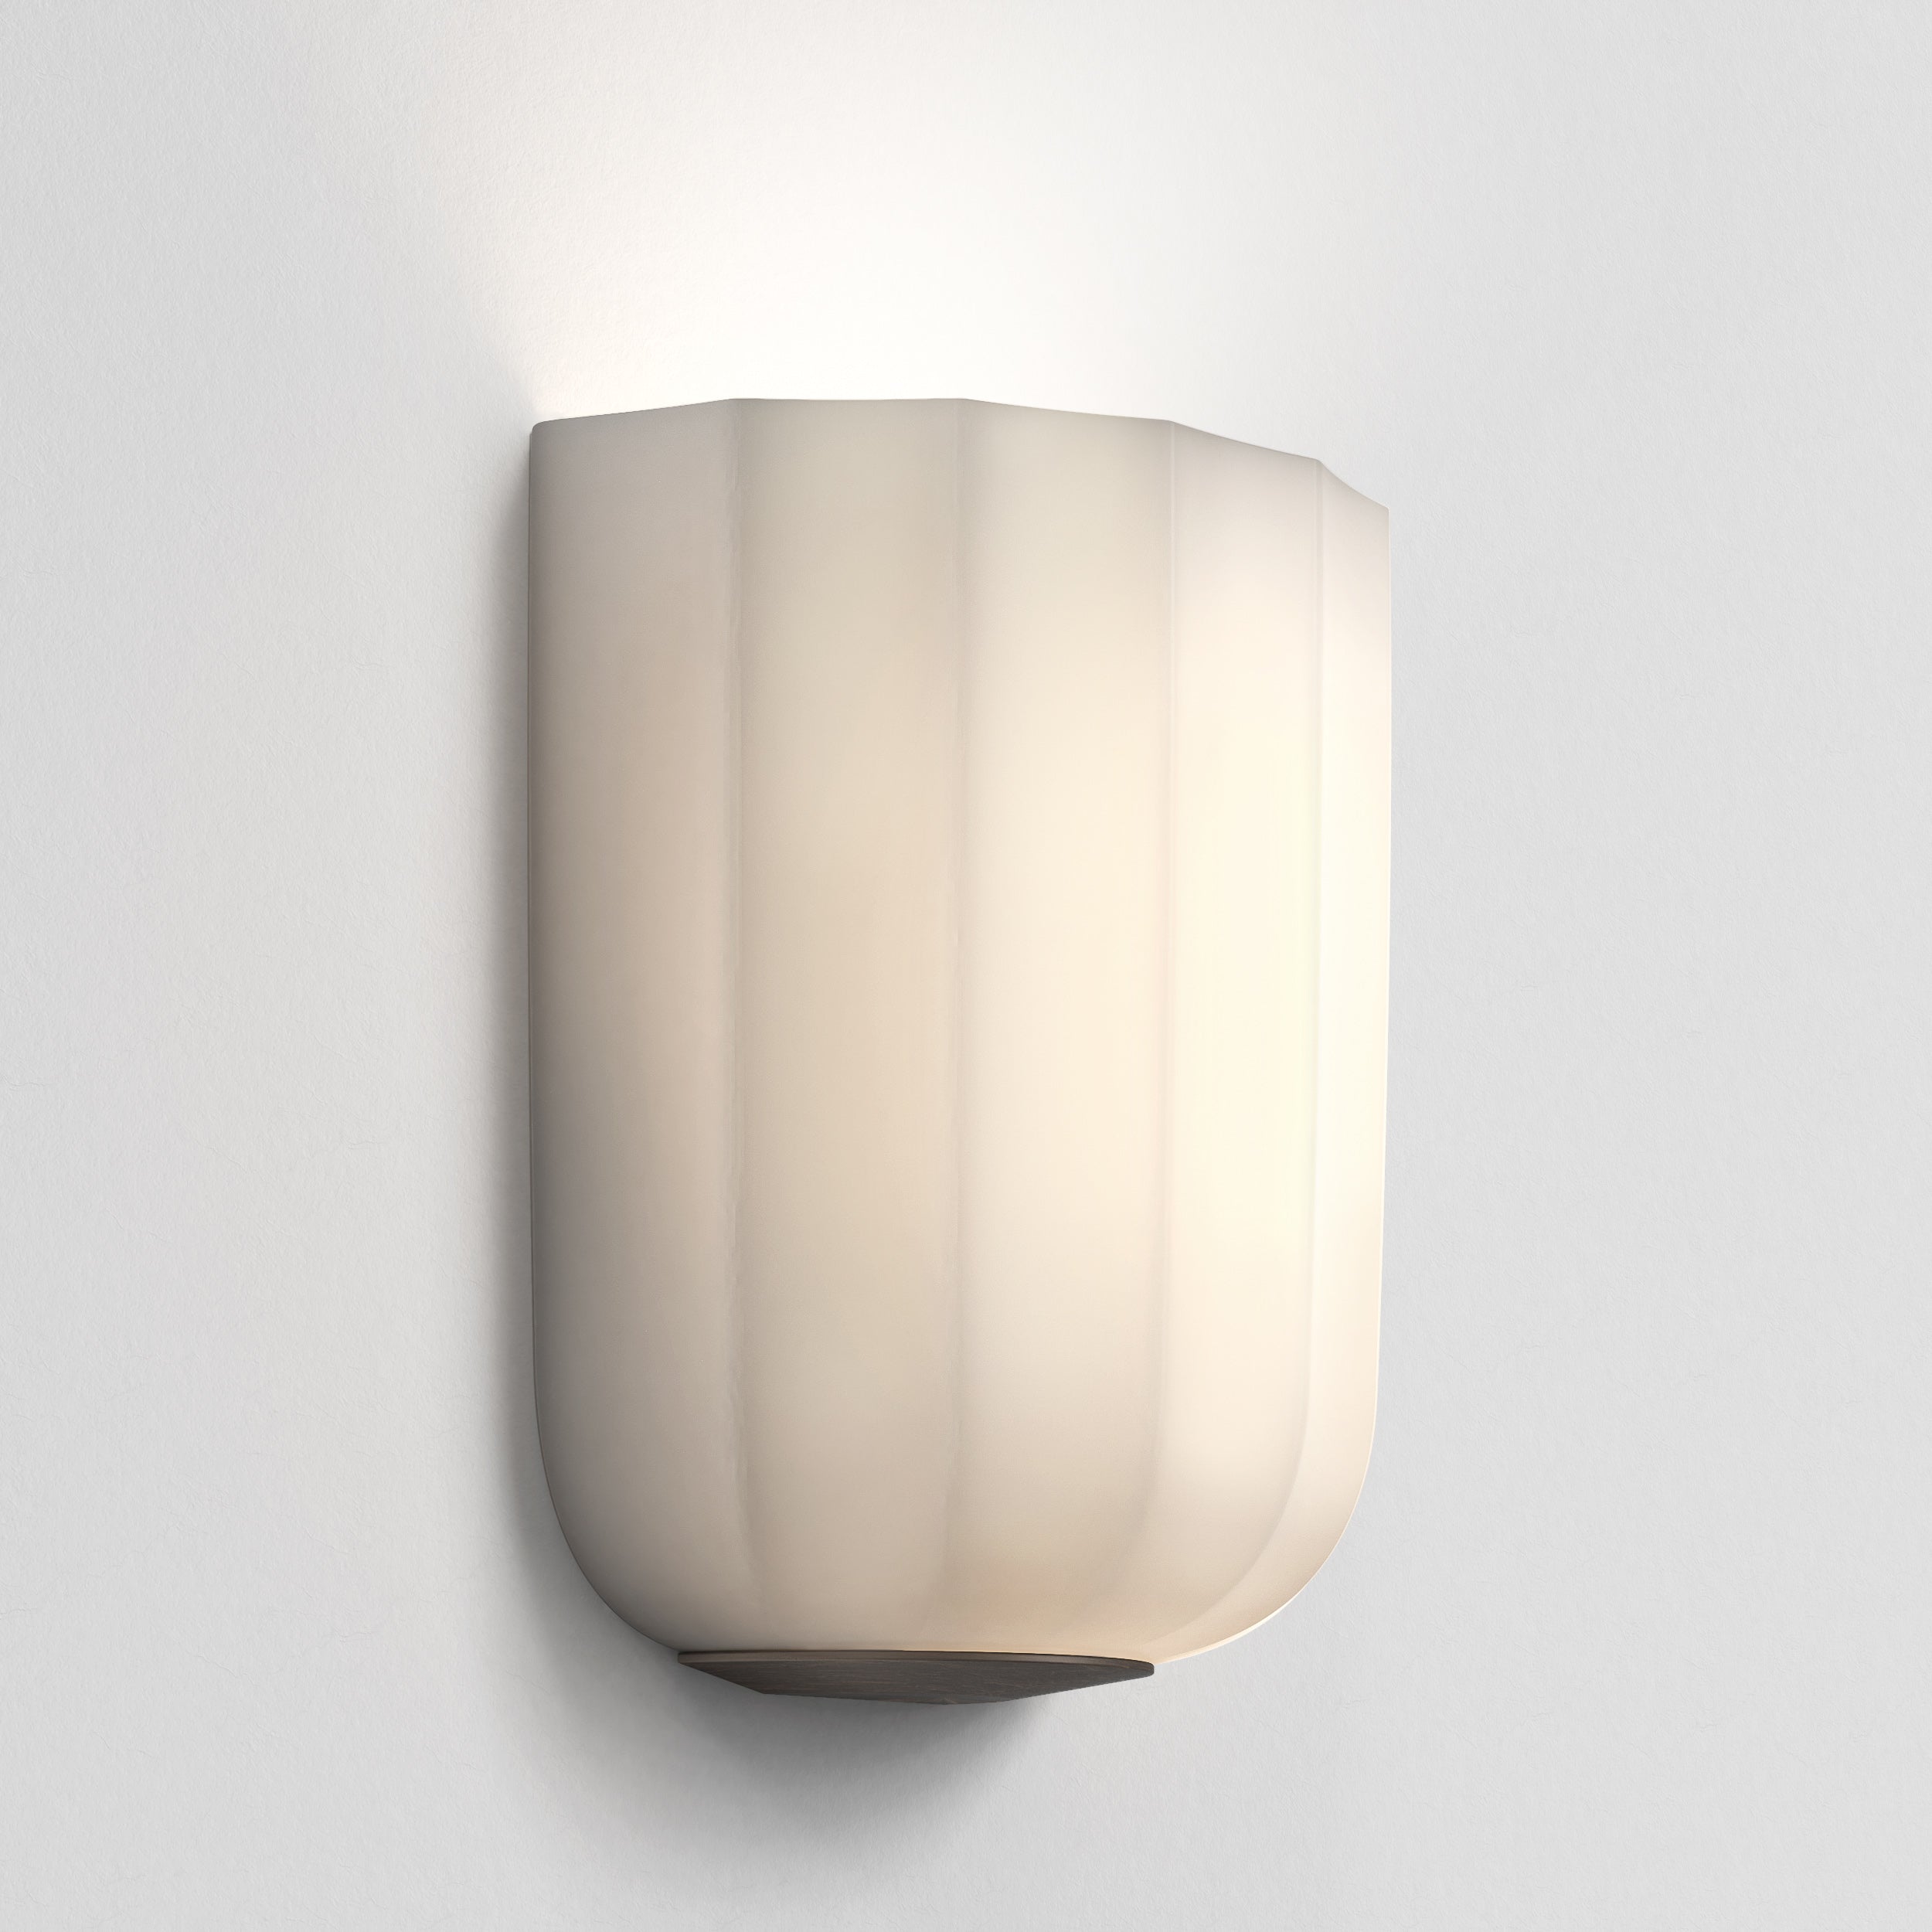 Astro Lighting Veo Wall Light Fixtures Astro Lighting 3.94x7.87x8.54 Bronze No, LED E26/Medium